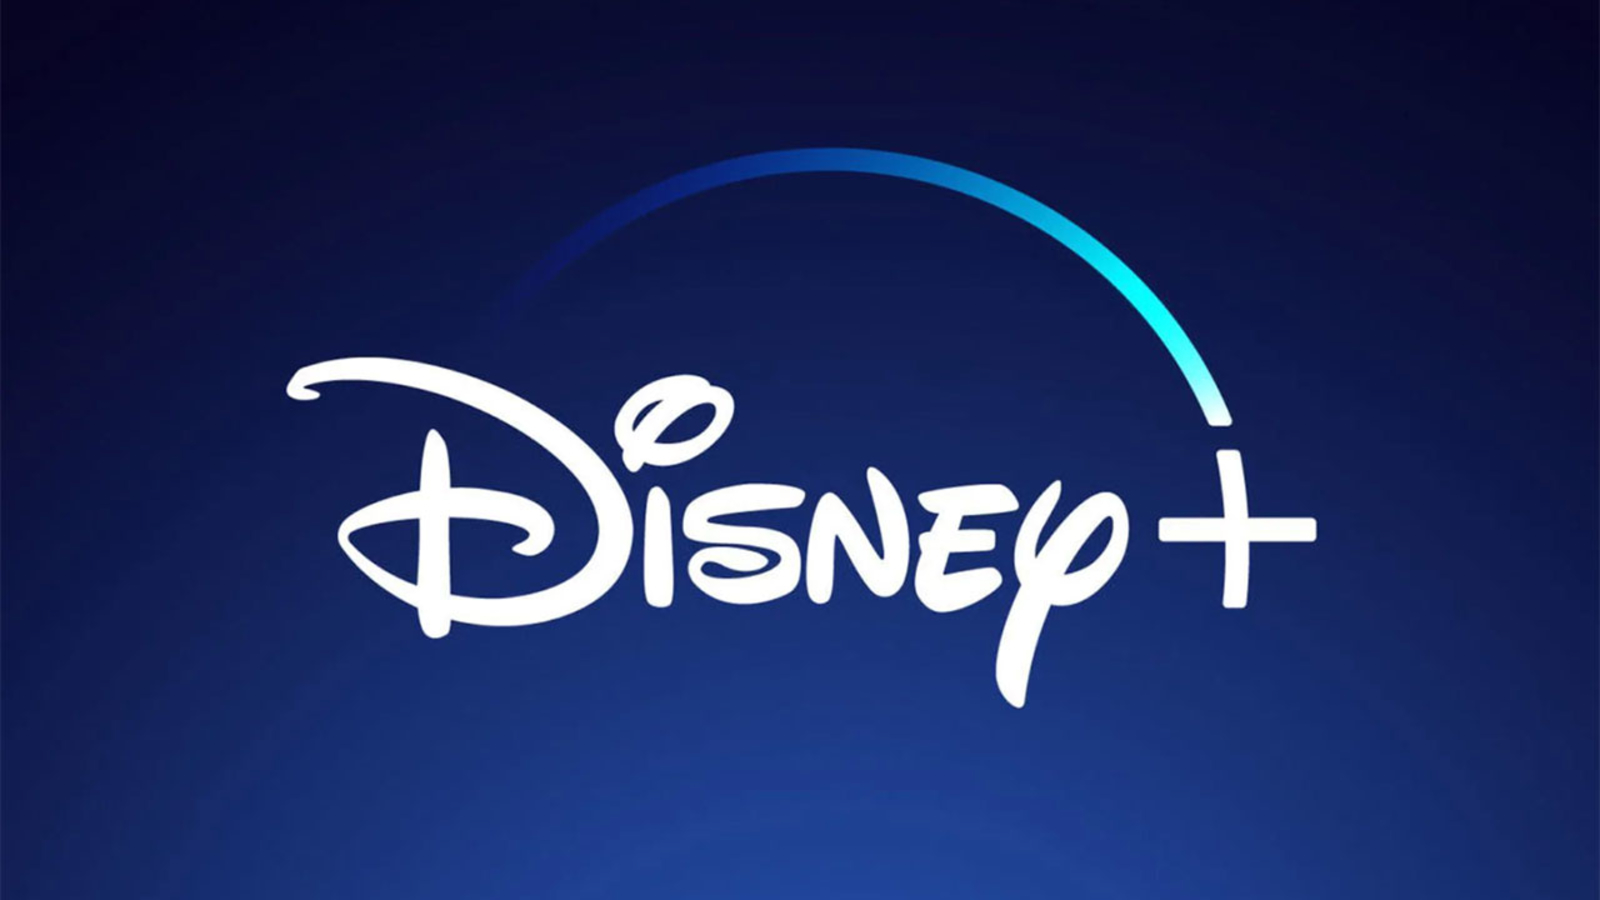 Full list of Disney+ launch titles